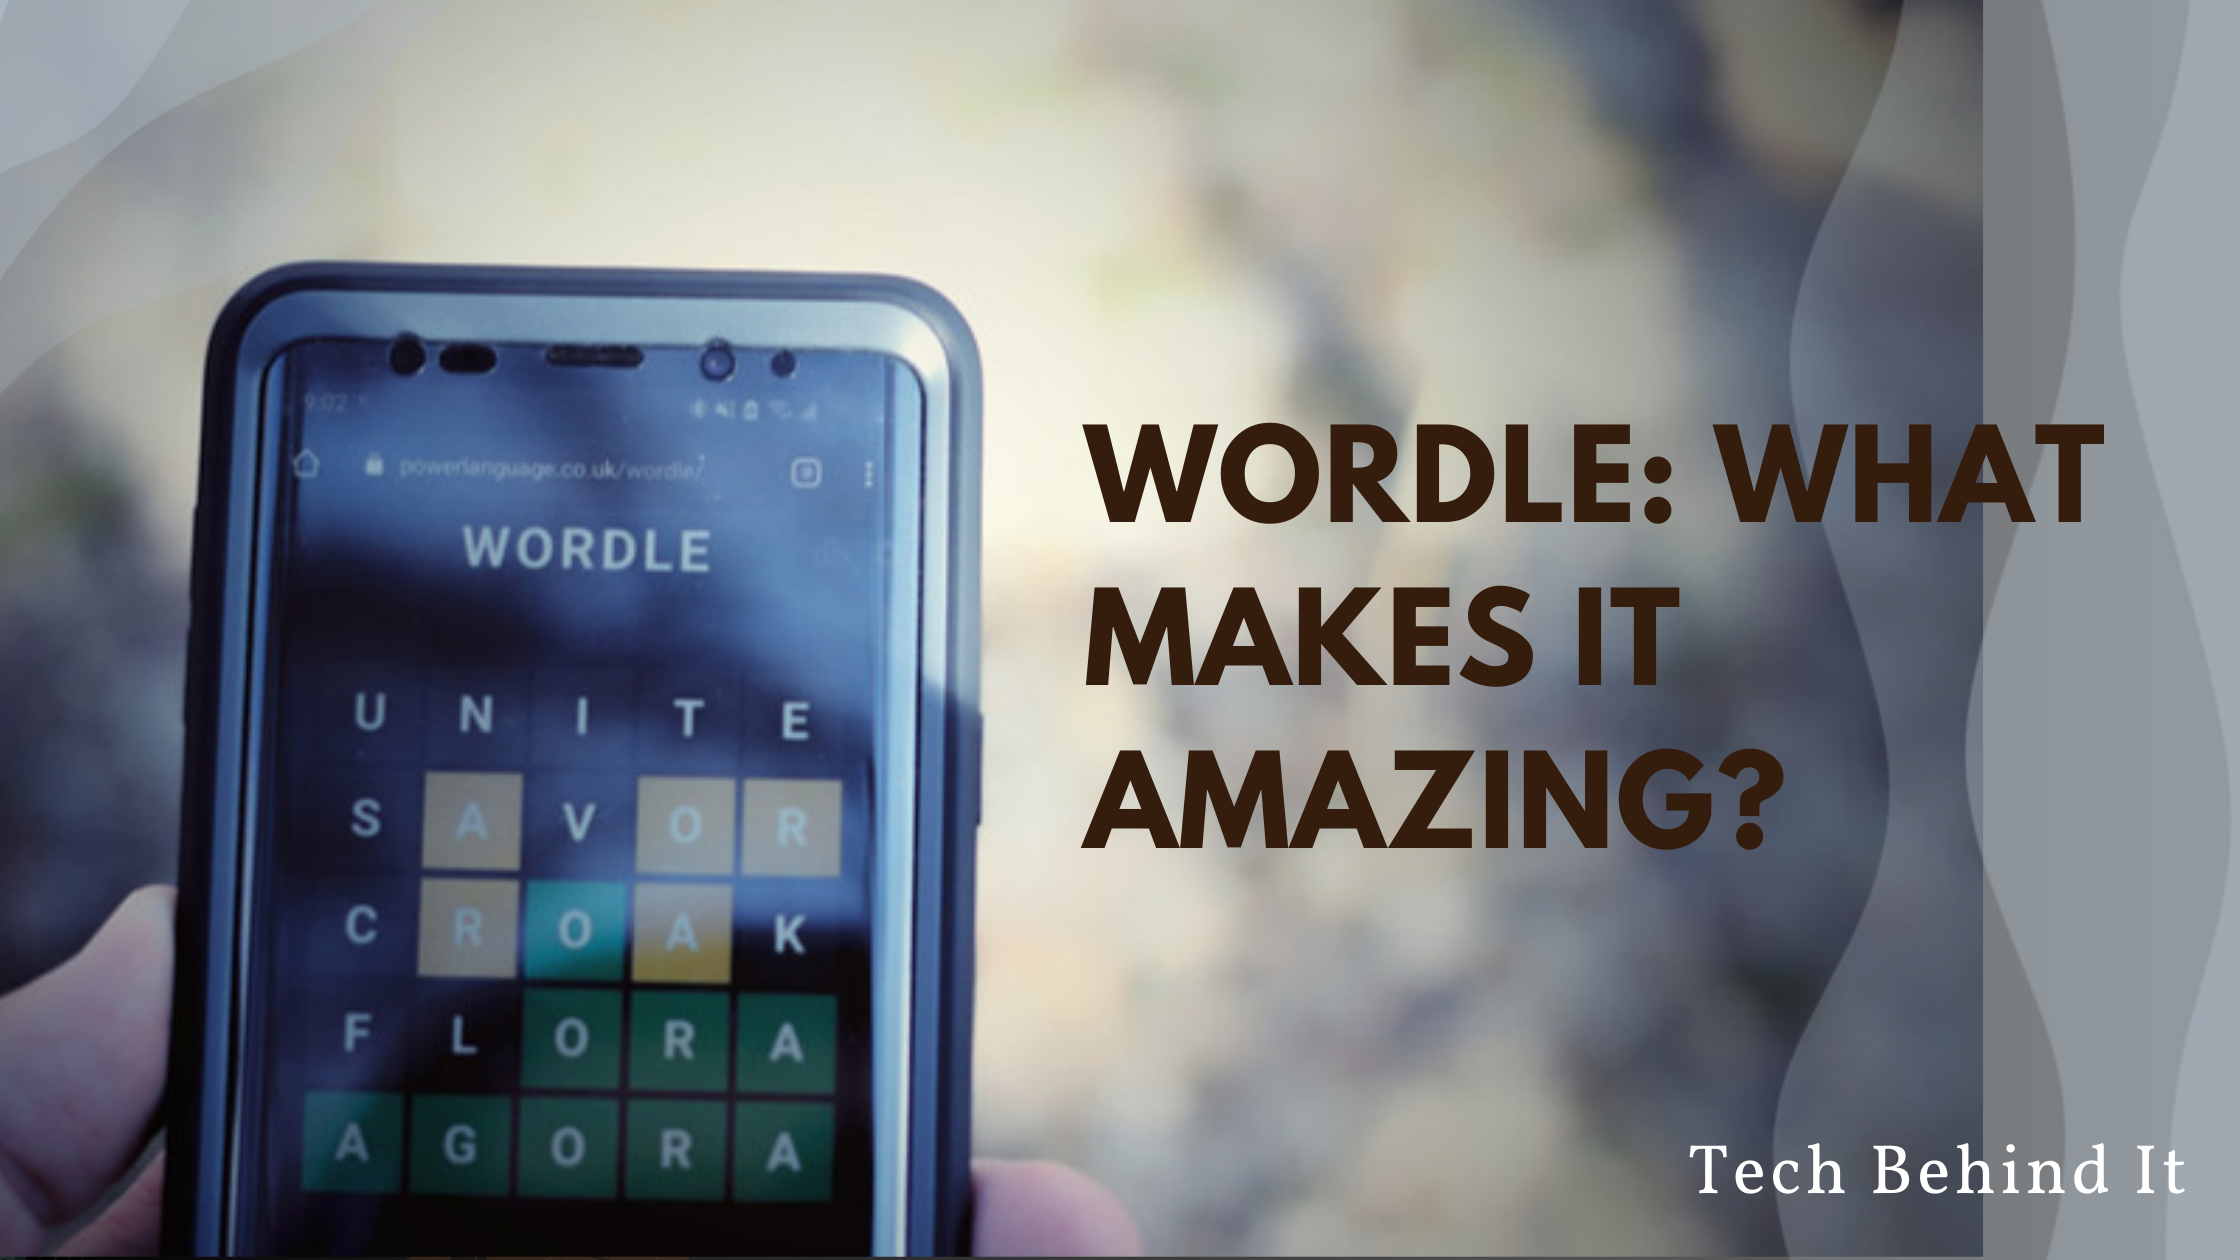 Wordle: What Makes It Amazing?